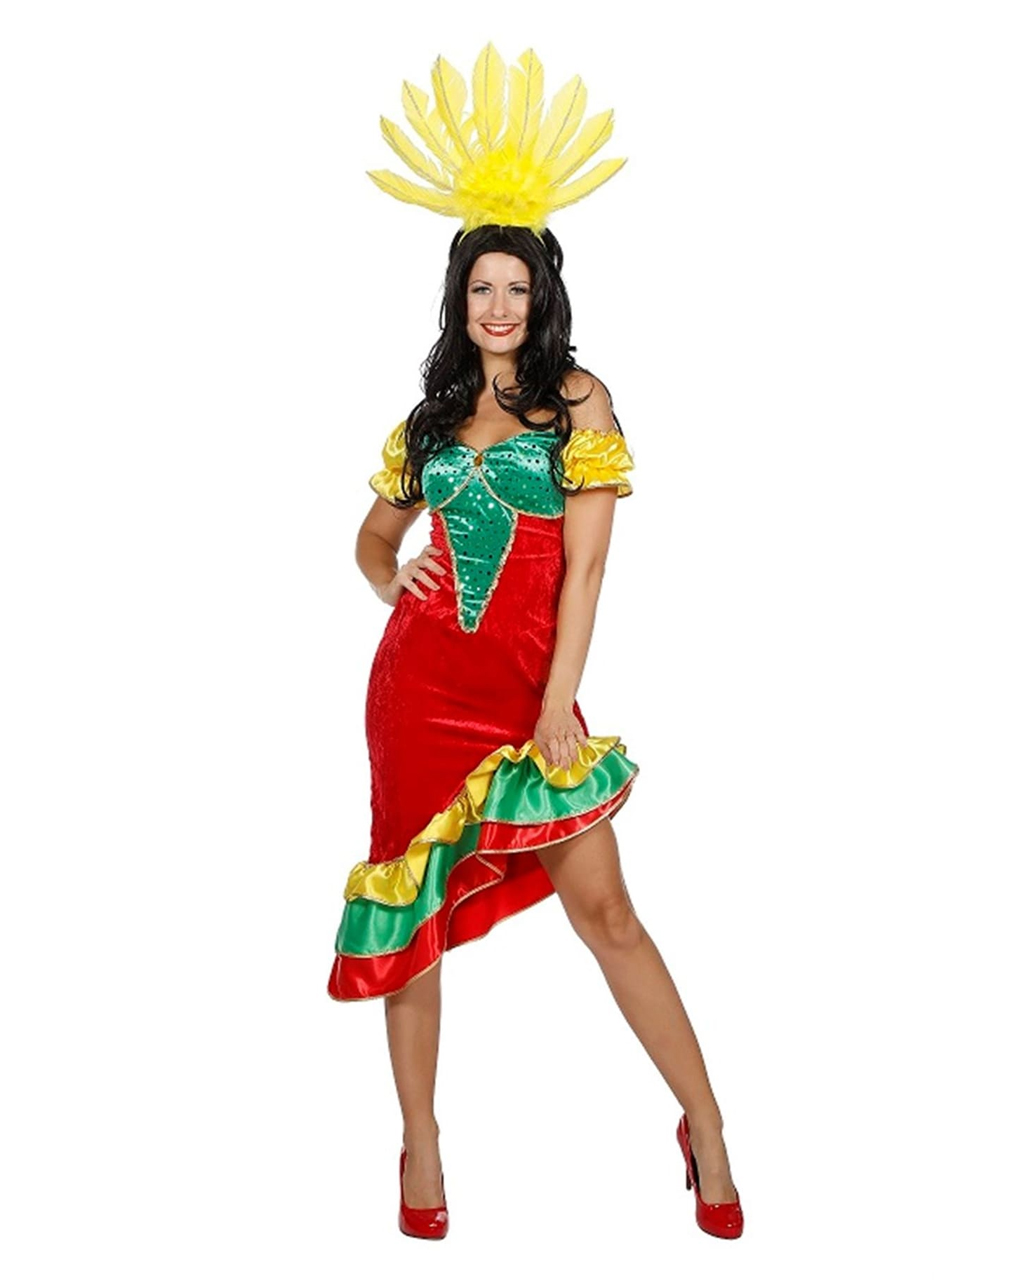 https://inst-1.cdn.shockers.de/hs_cdn/out/pictures/master/product/1/samba-brasilianerin-kostuem-samba-taenzerin-verkleidung-karneval-in-rio-verkleidung-36446.jpg